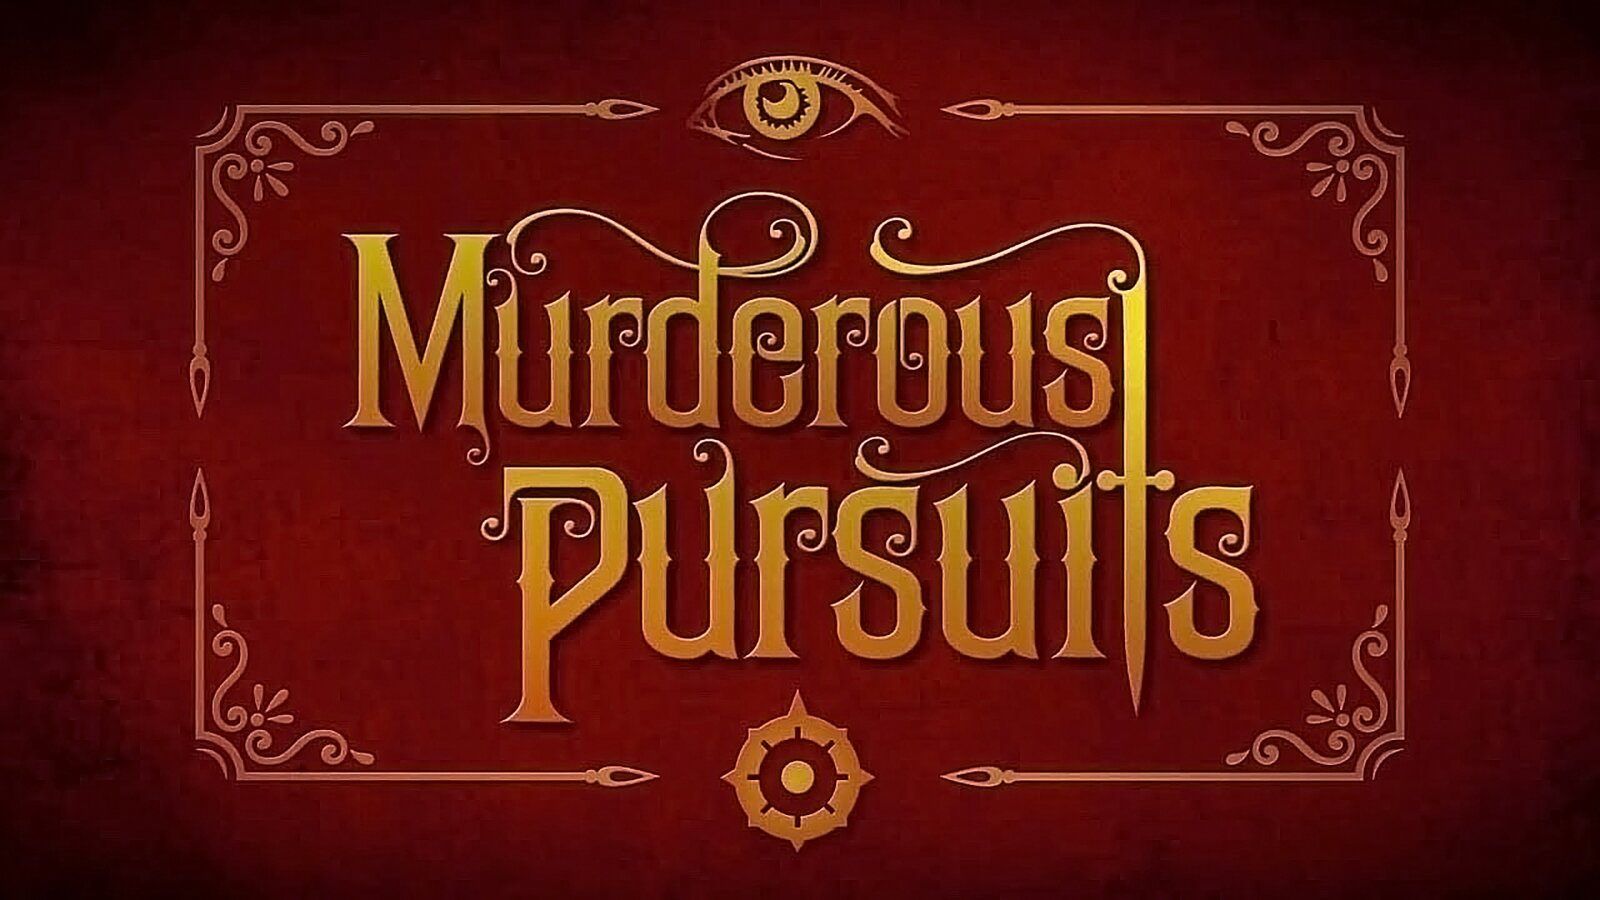 Murderous Pursuits - Deluxe Edition